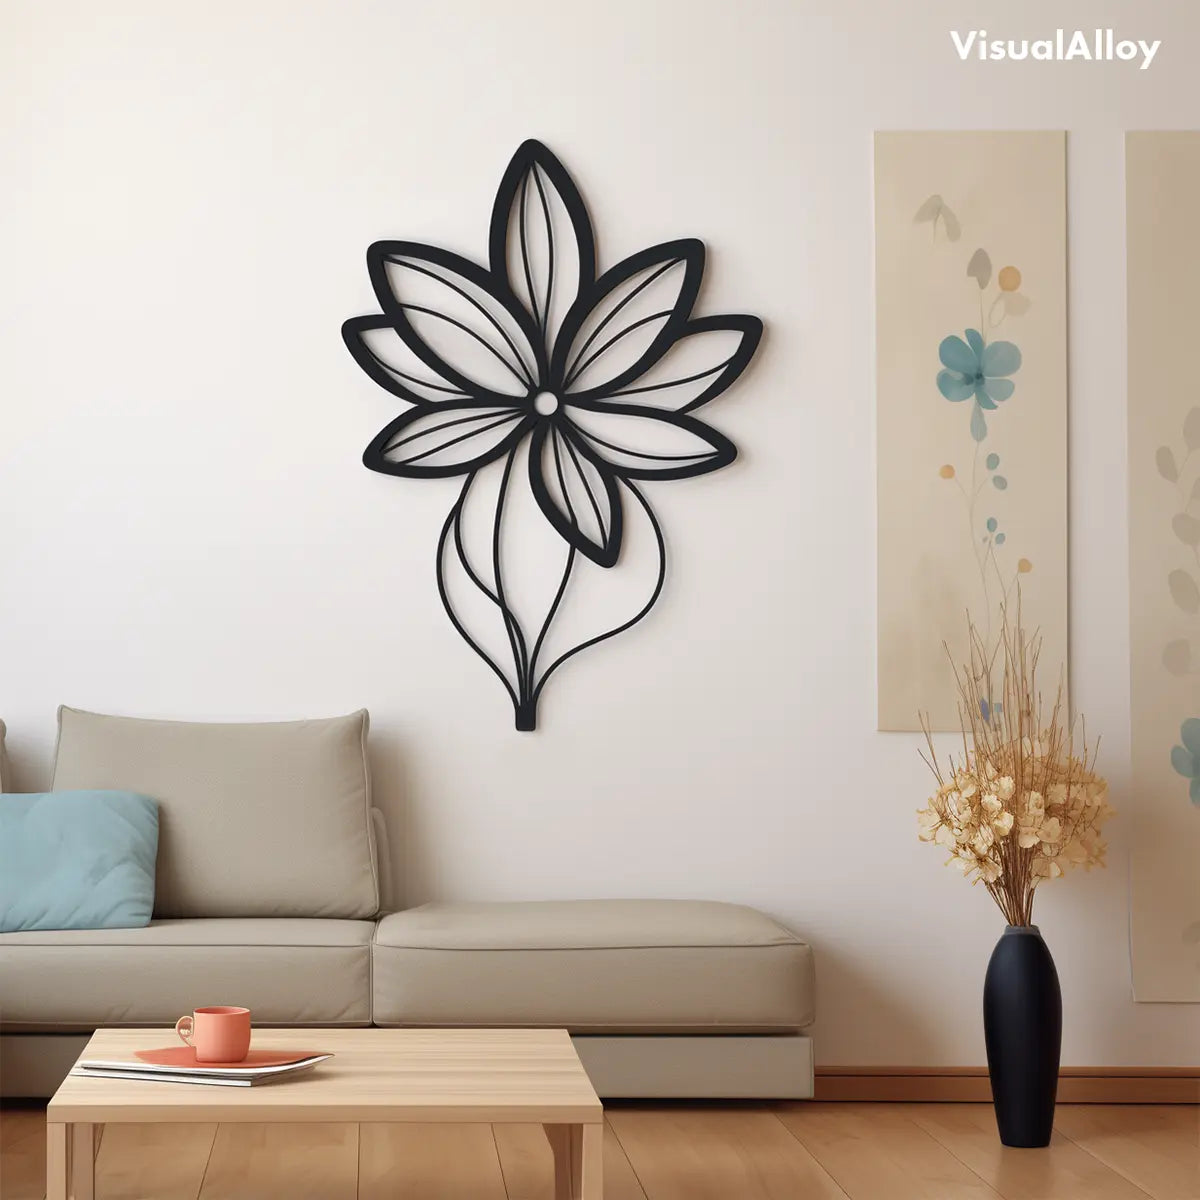 Flower metal wall art - black color